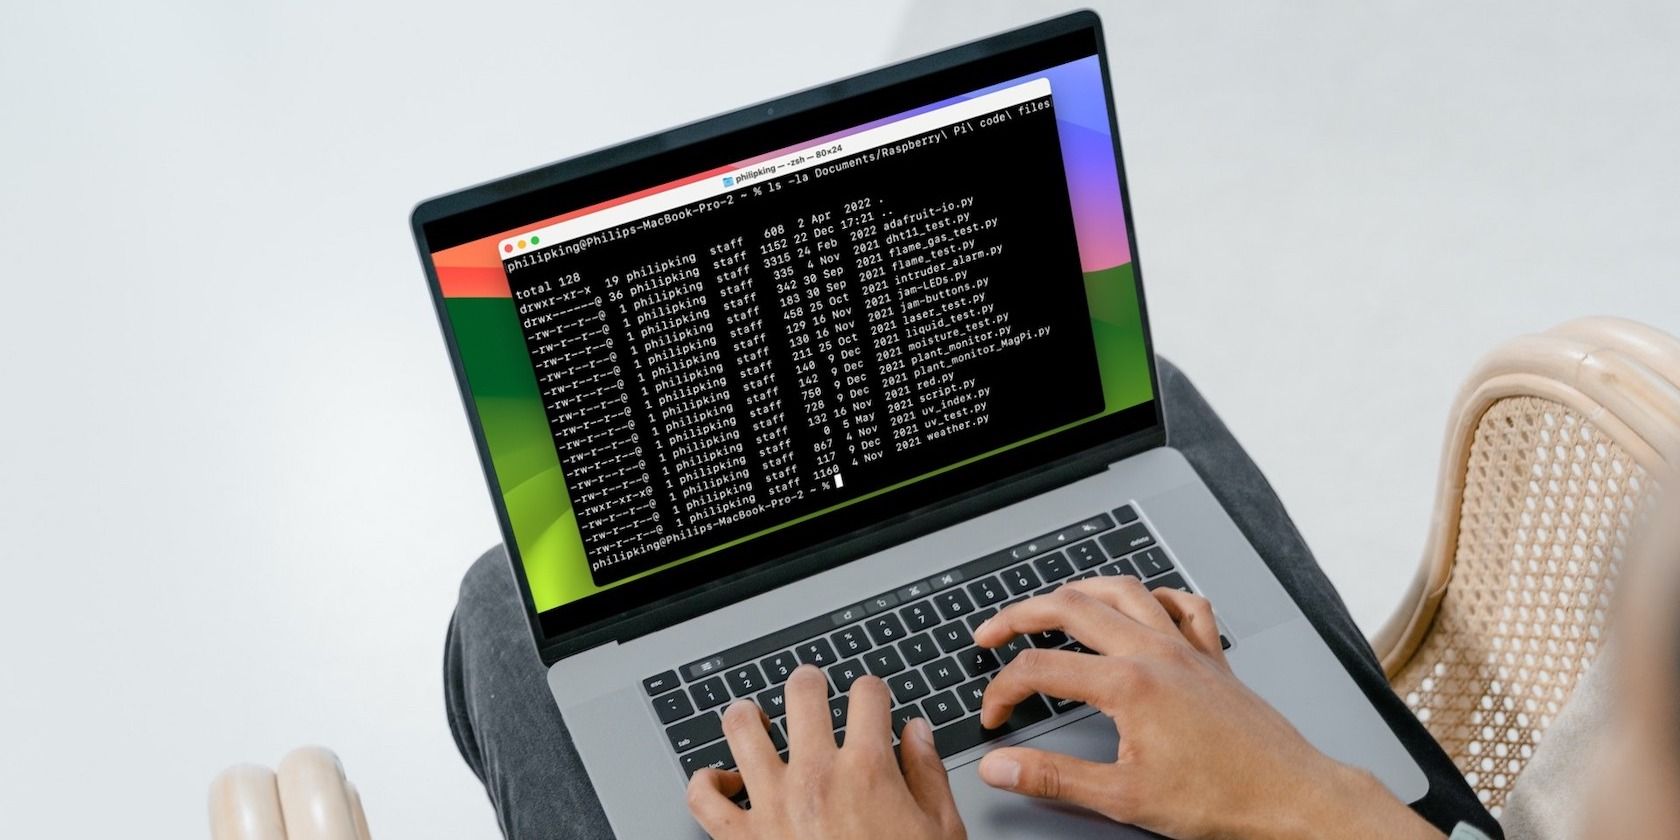 Man using MacBook with Terminal window on screen